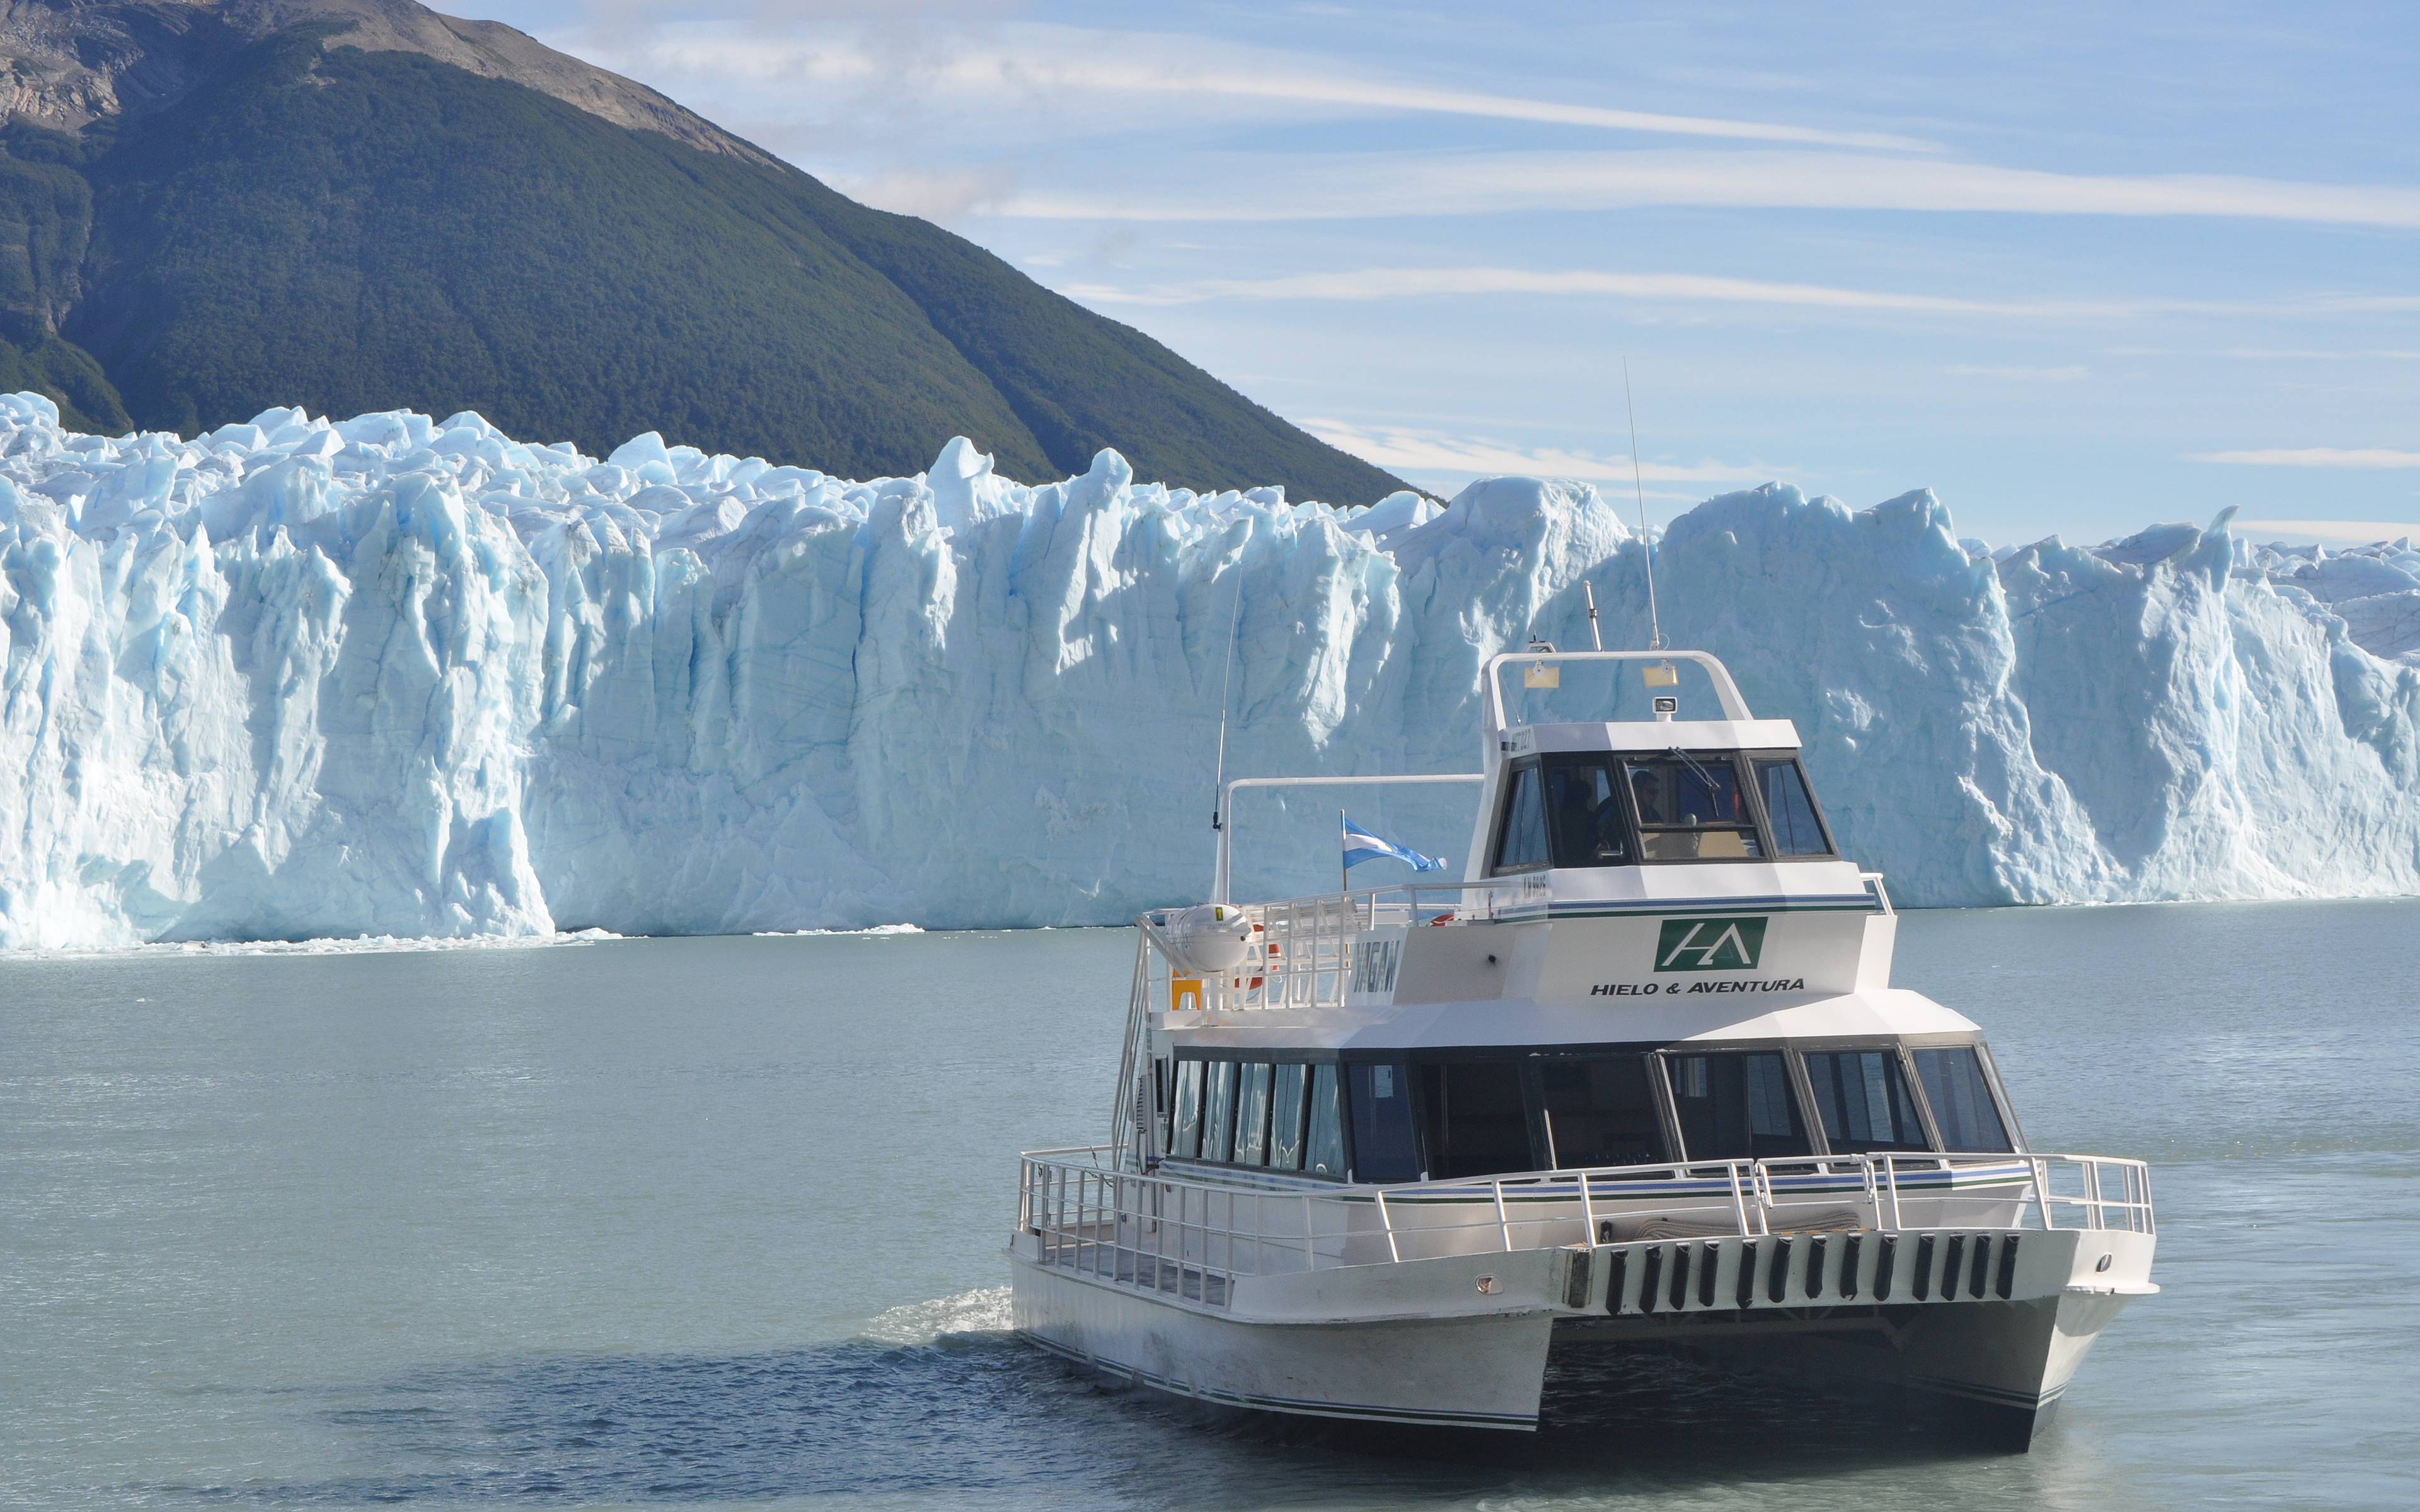  Crucero por el Lago Argentino